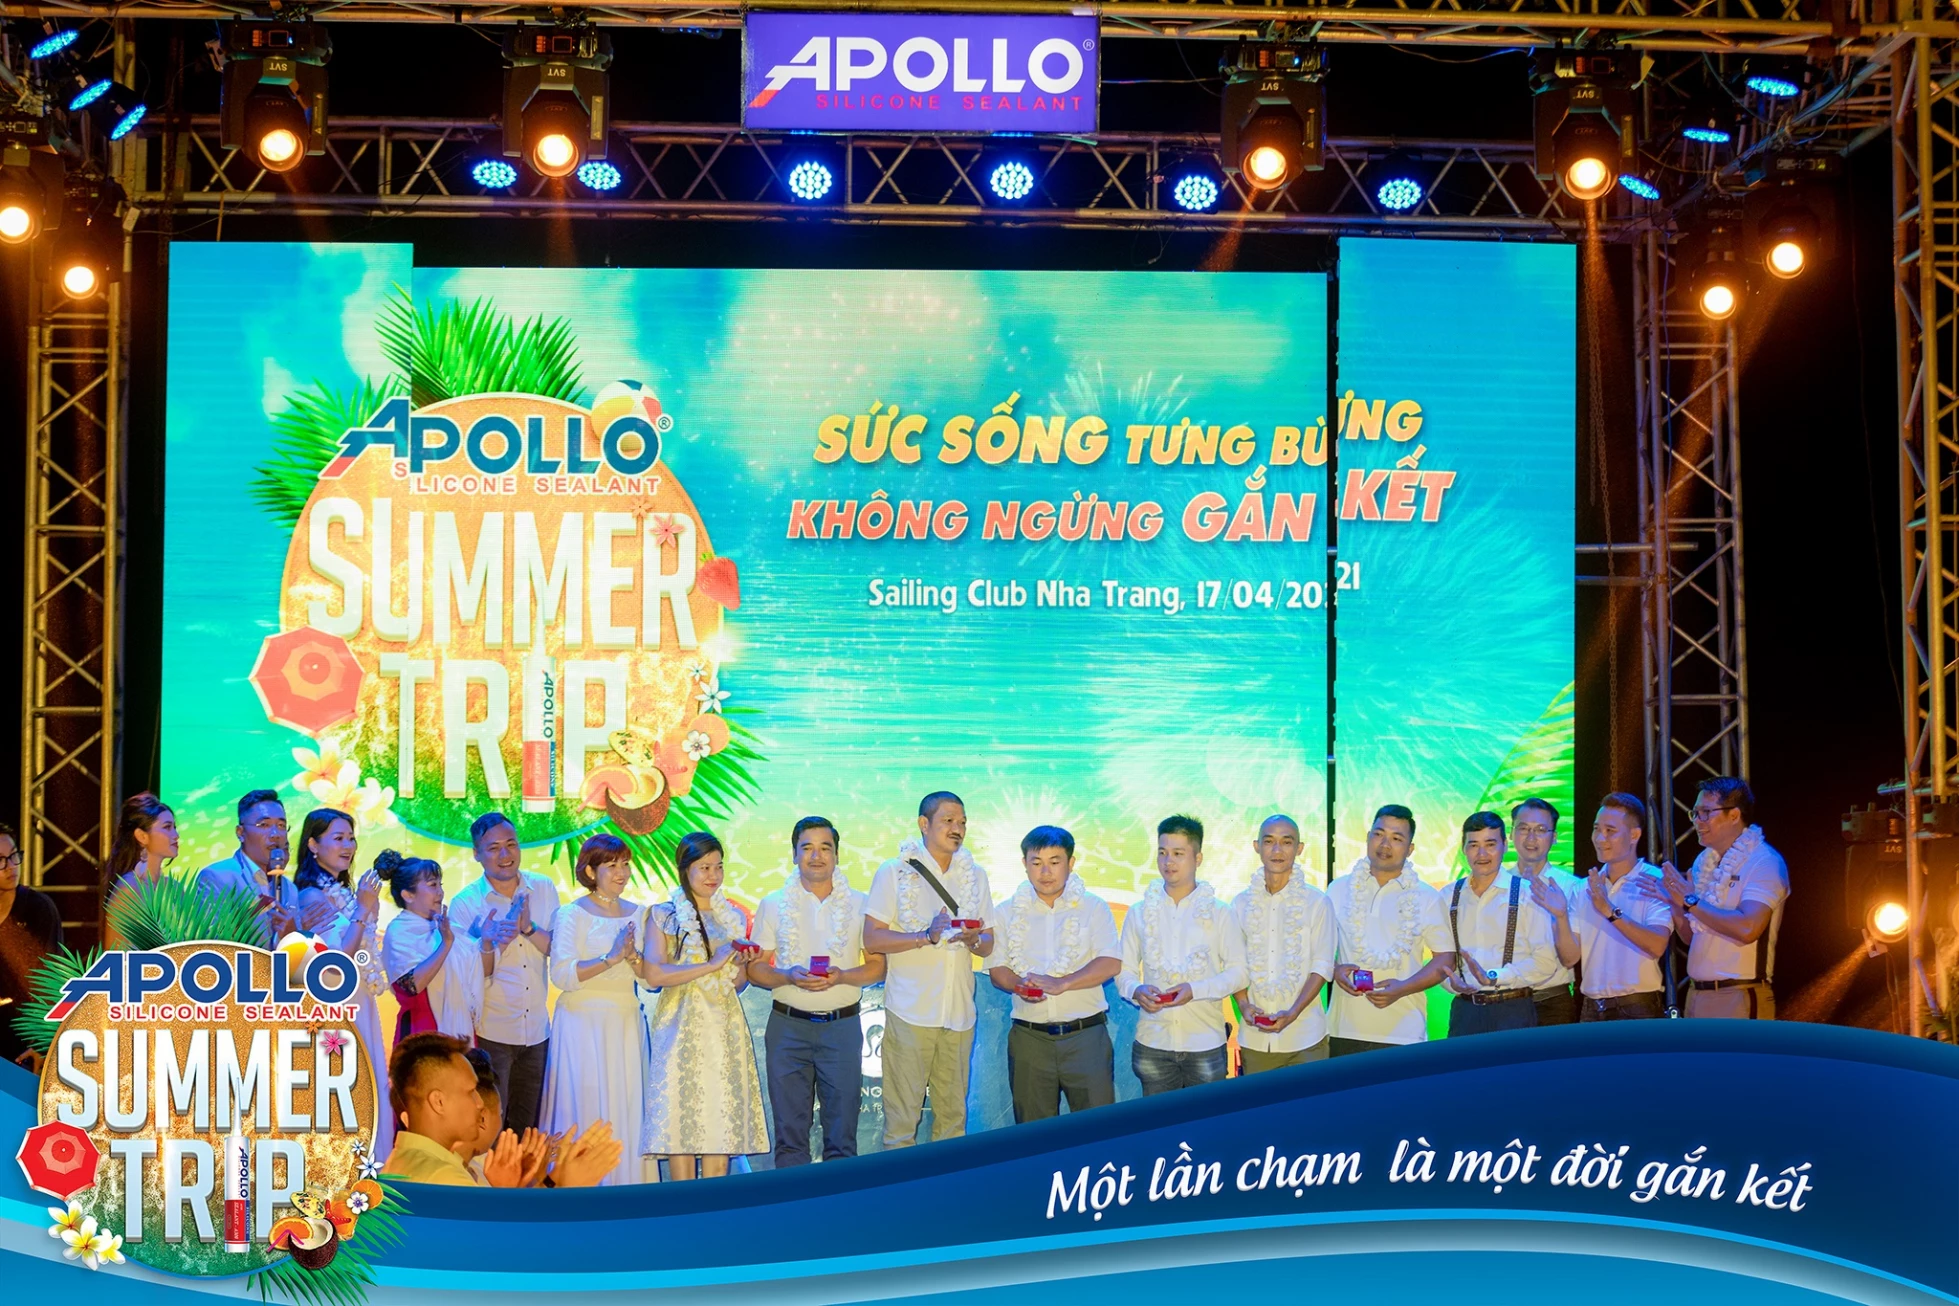 Apollo summer trip - The bonding reunion of loyal customers of QHA